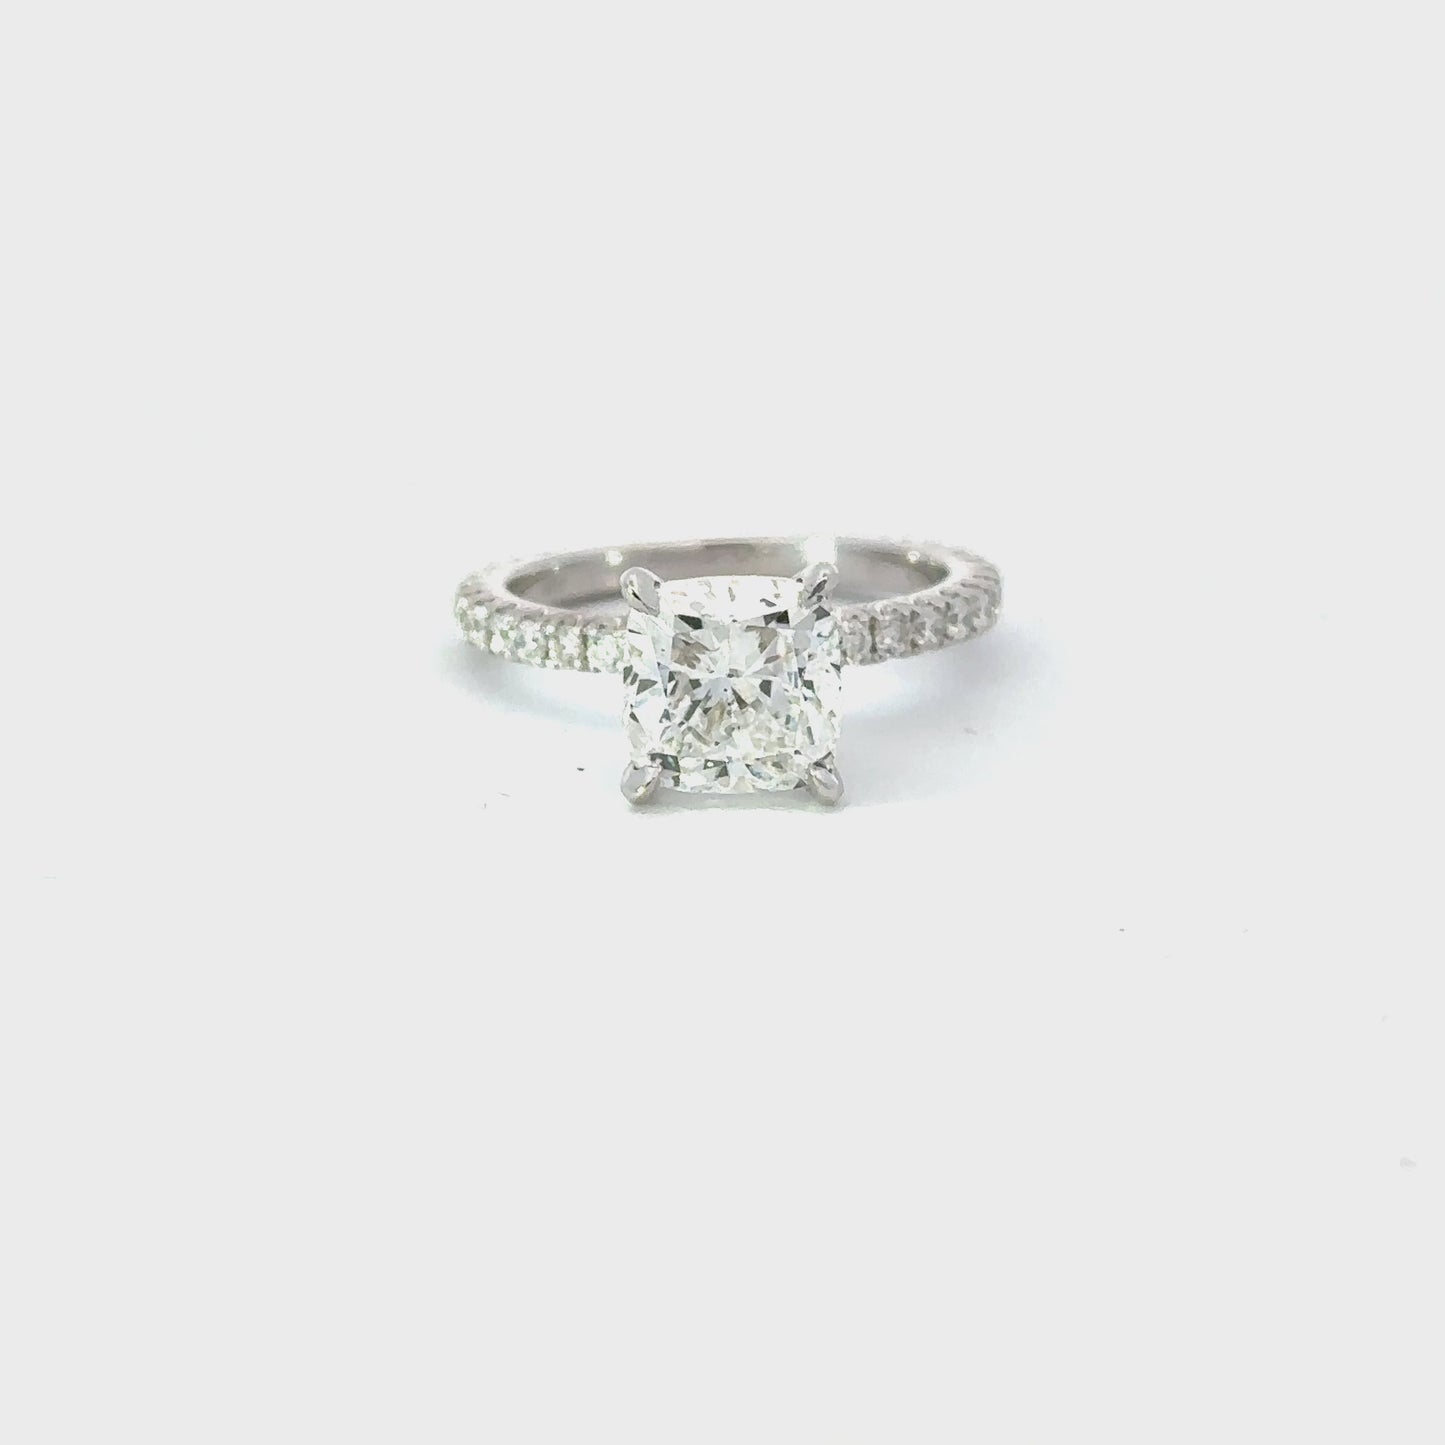 2.61 Carat Natural Cushion Diamond Engagement Ring with Diamond Band